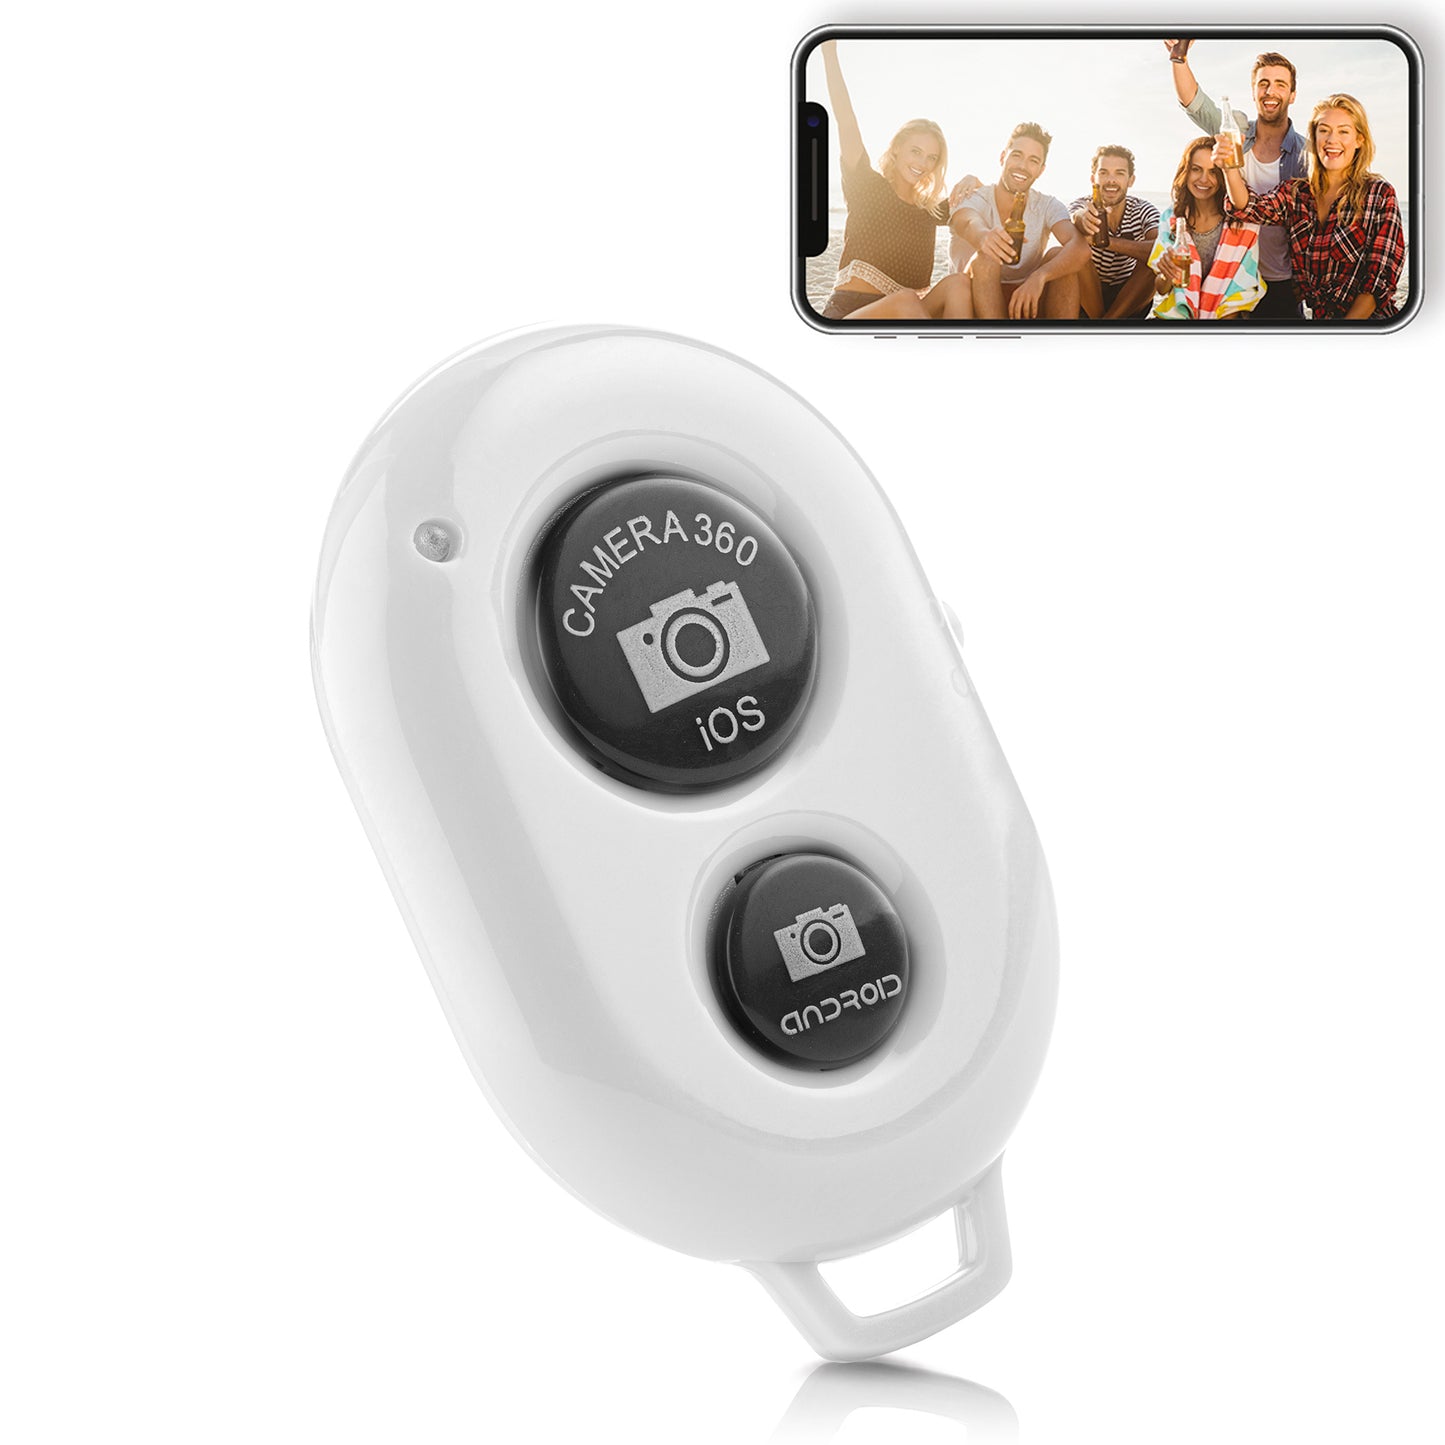 Bluetooth remote shutter afstandsbediening voor smartphone camera - verschillende kleuren